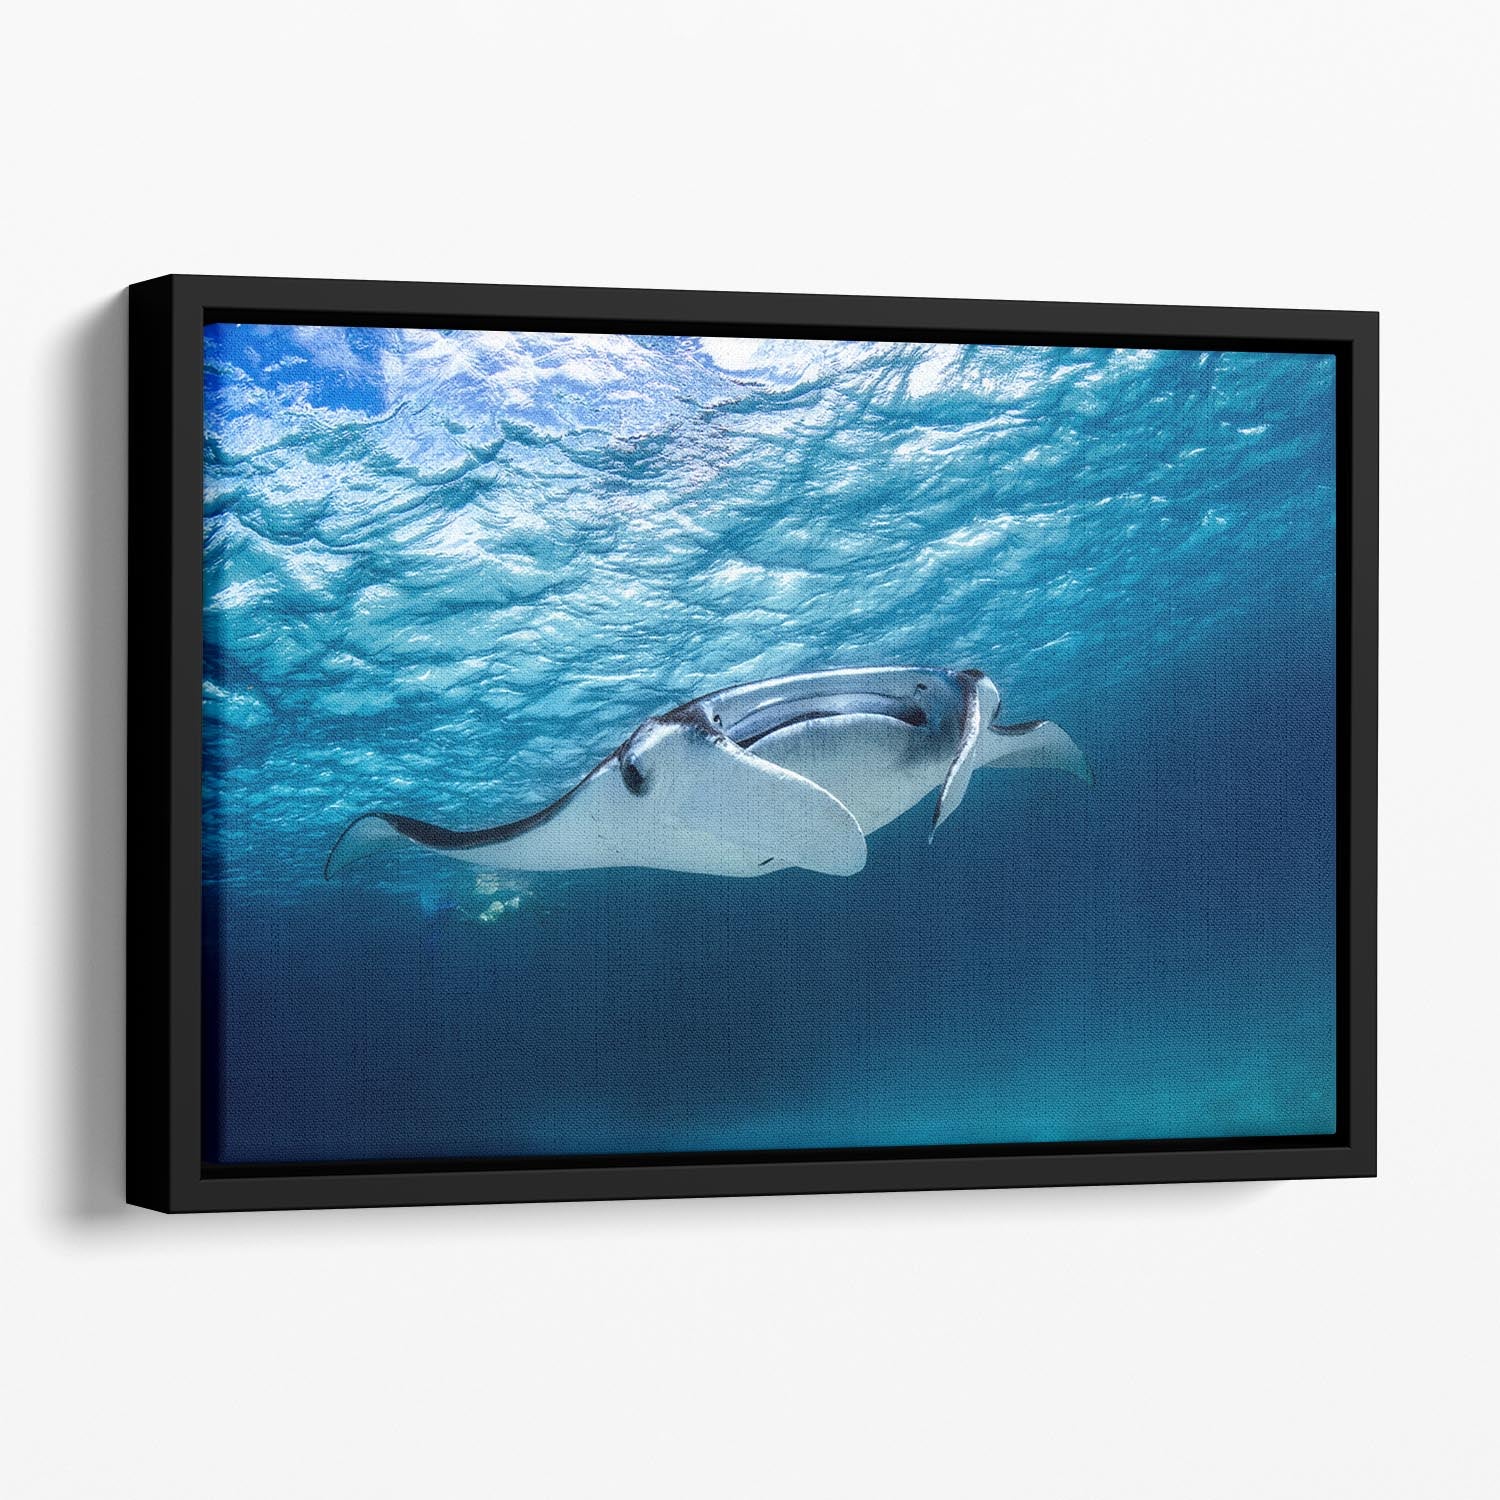 Manta Ray Floating Framed Canvas - Canvas Art Rocks - 1